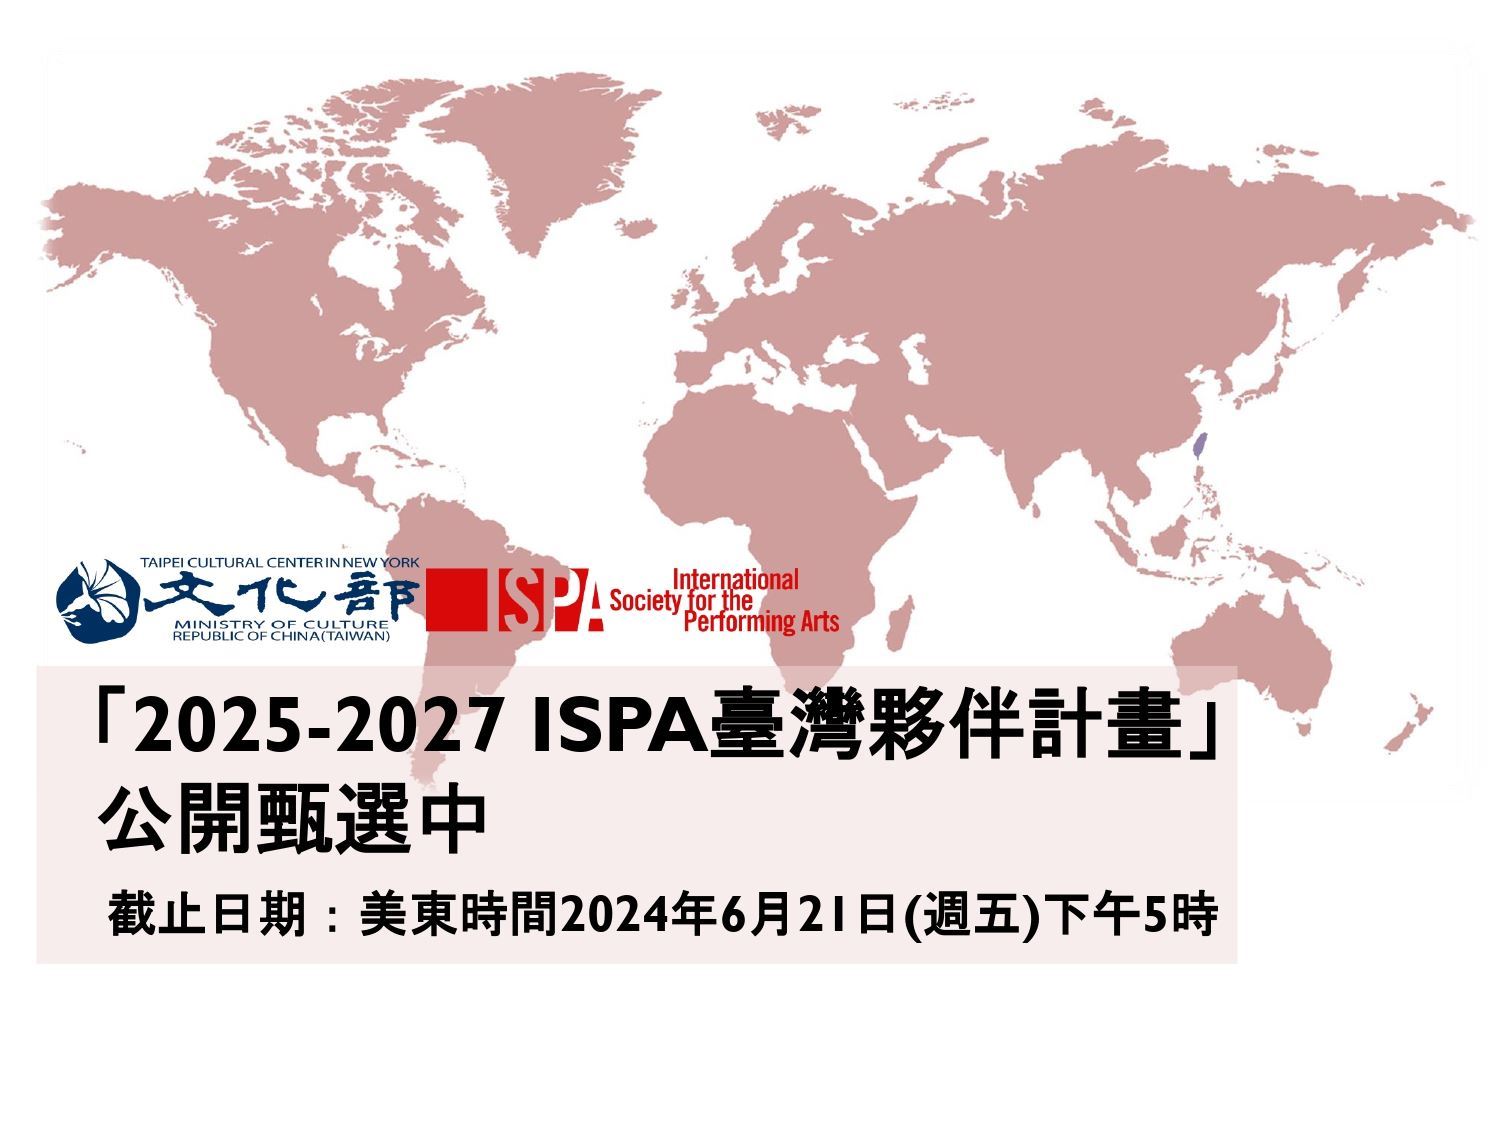 2025-2027 ISPA Taiwan Fellowship Application opens for Taiwan’s arts professionals